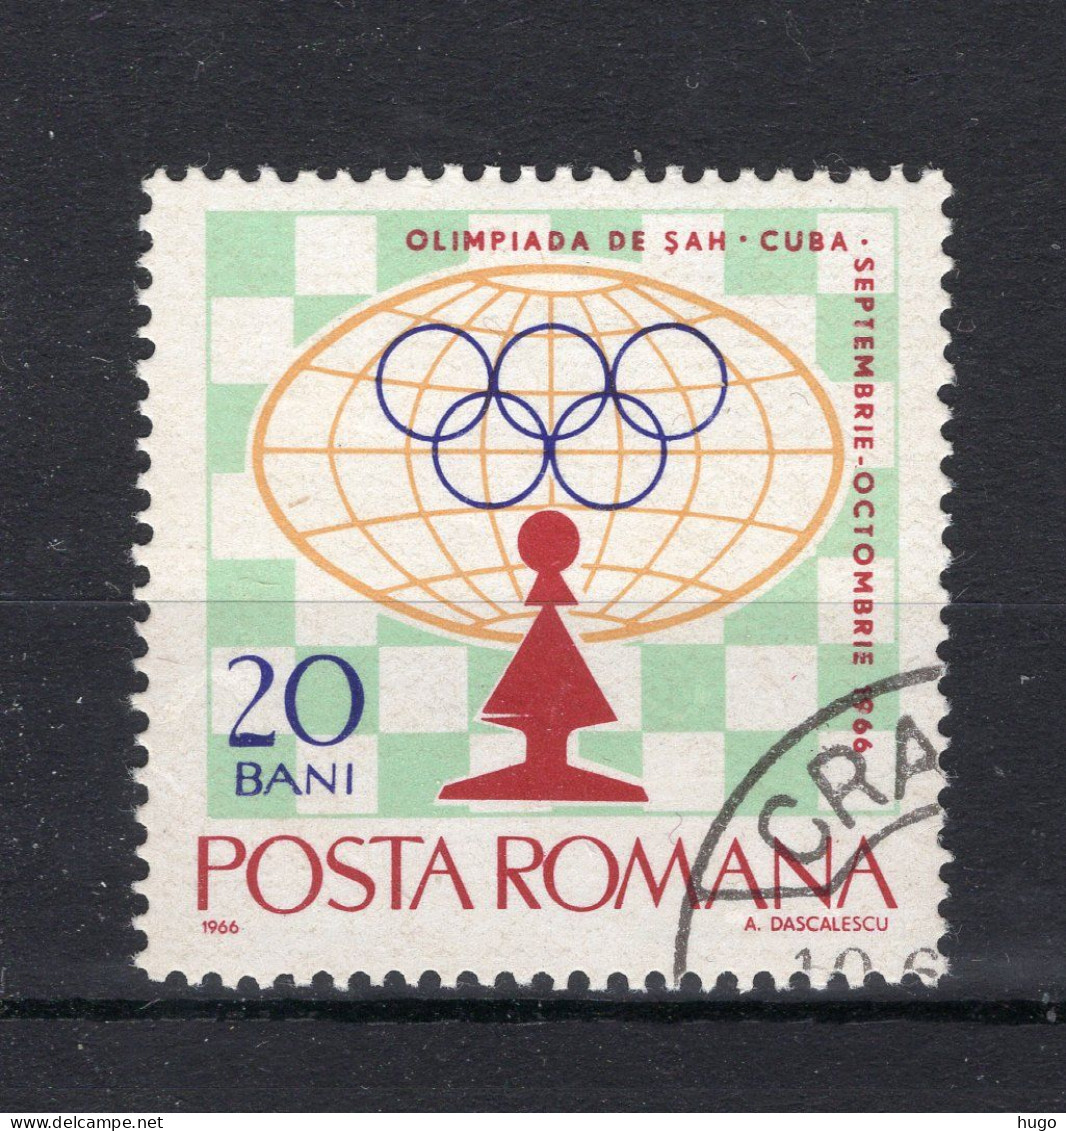 ROEMENIE Yt. 2193° Gestempeld 1966 - Used Stamps